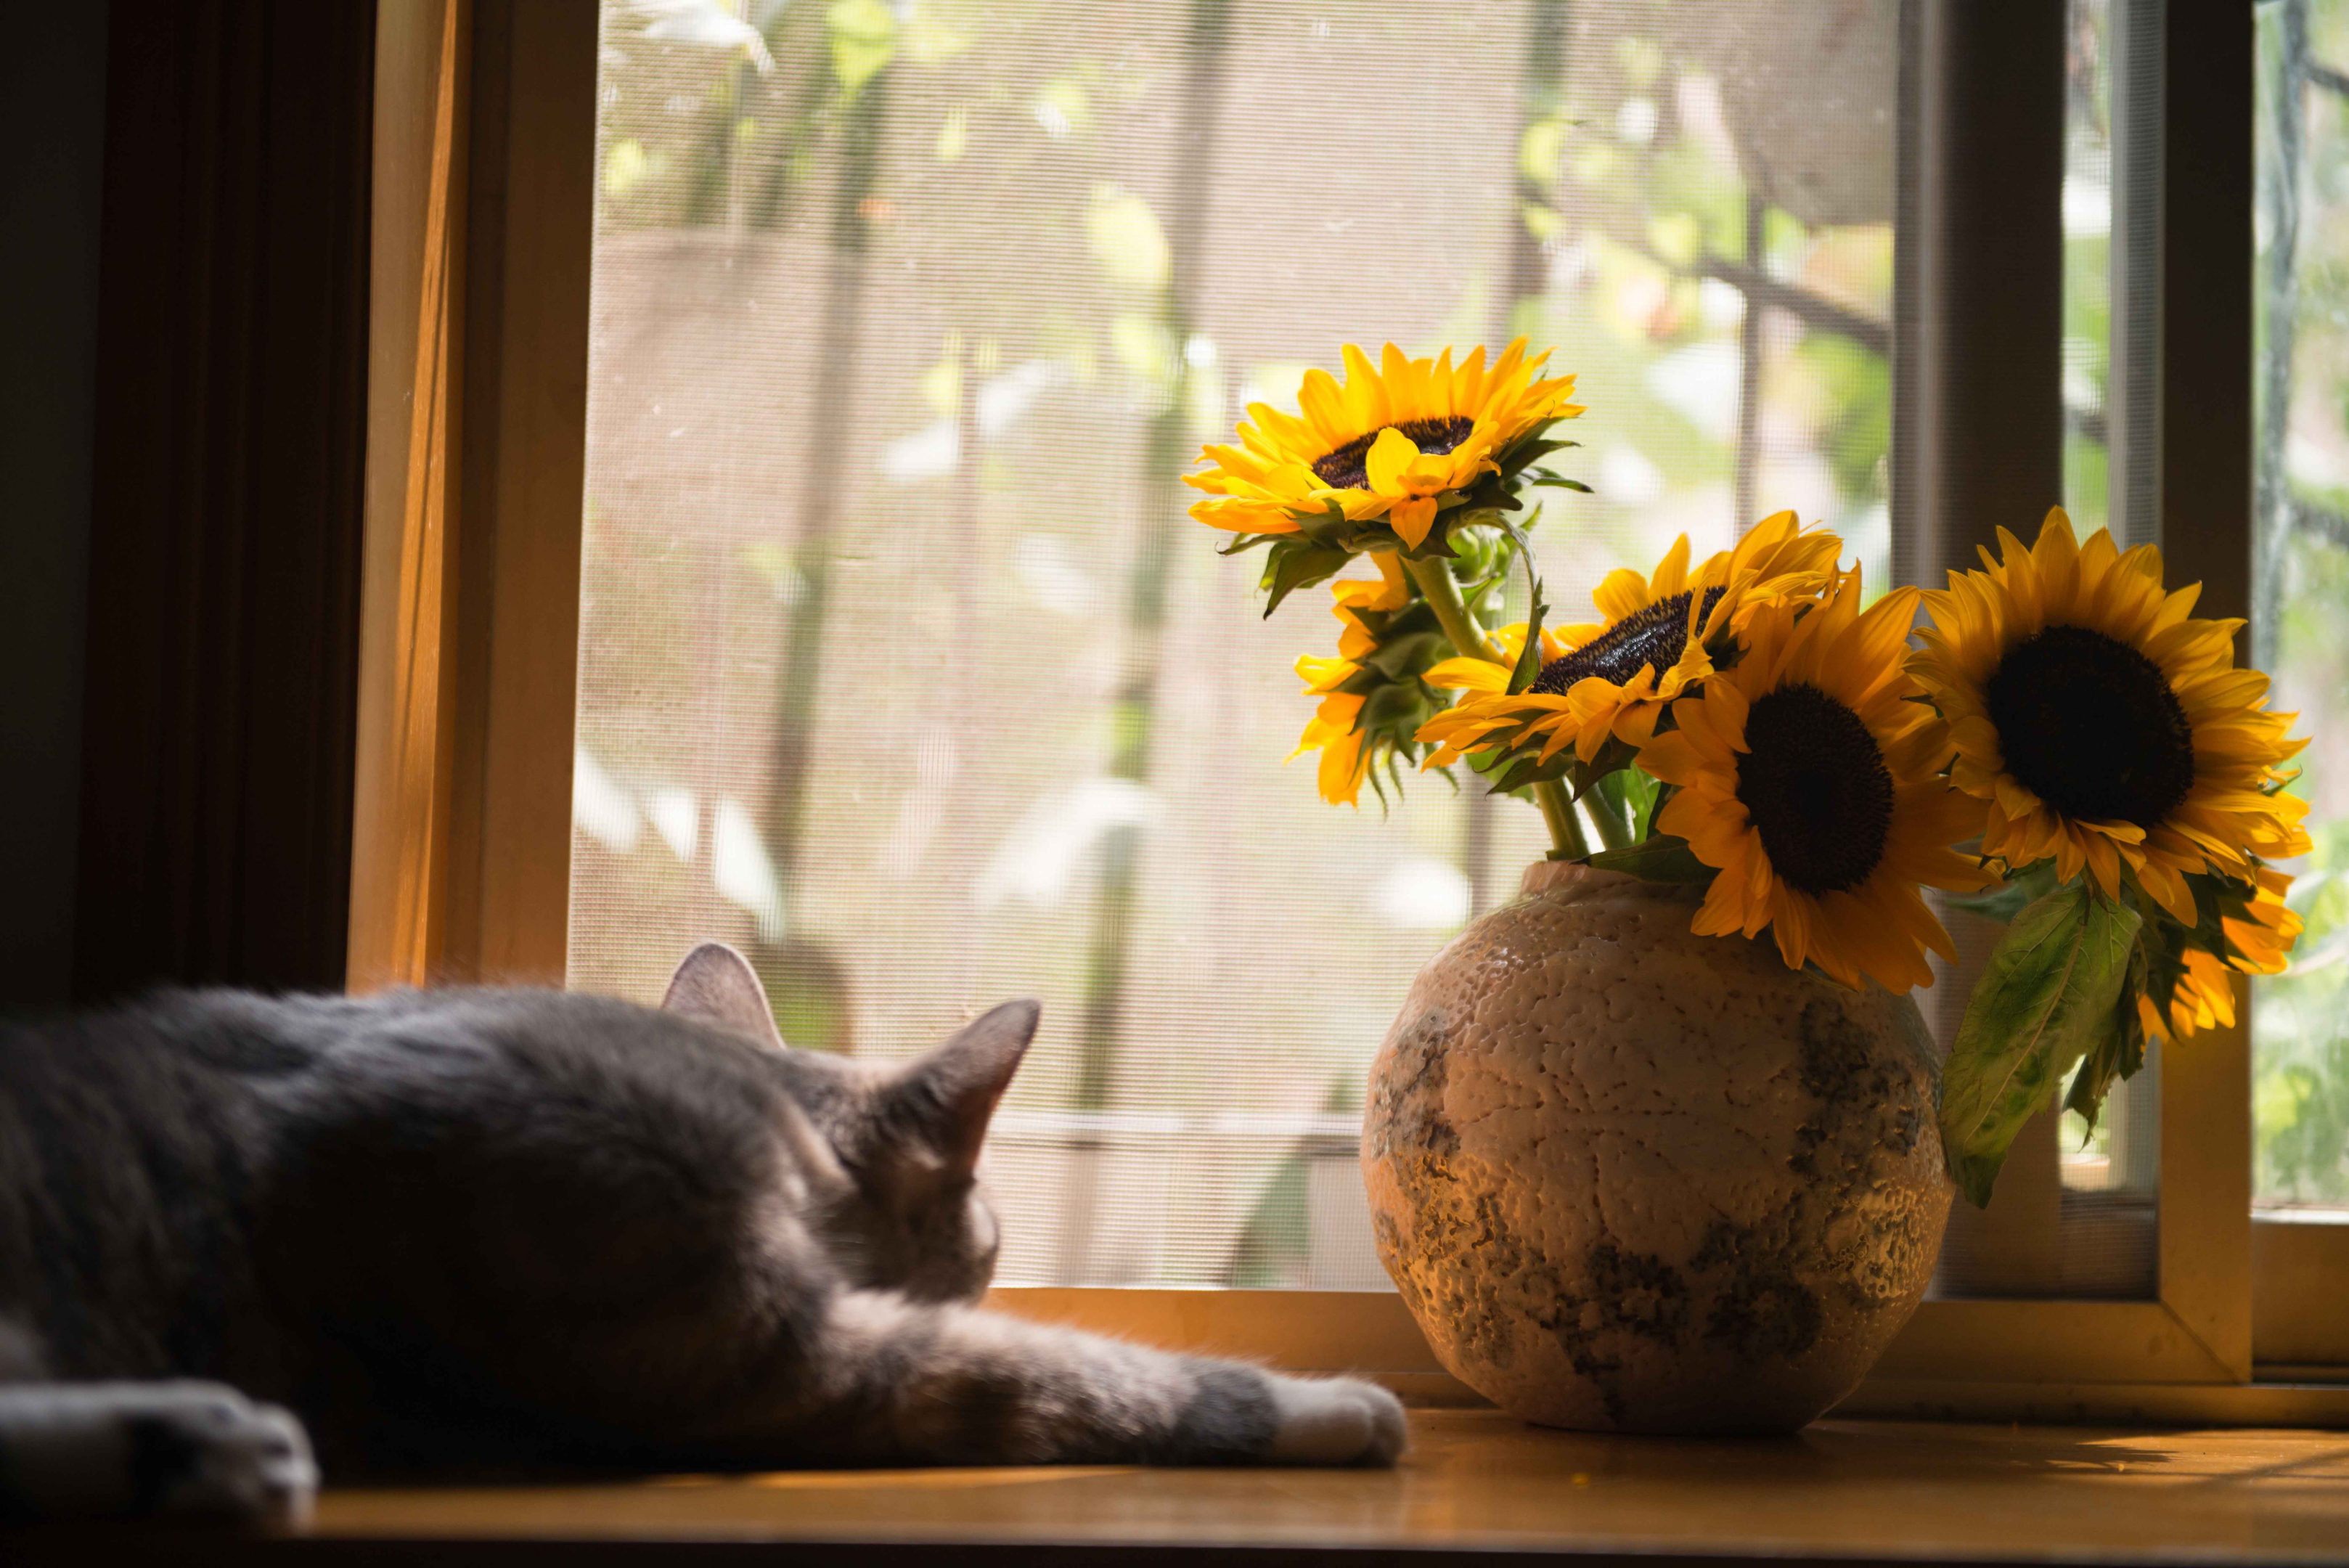 https://www.pexels.com/photo/gray-cat-near-gray-vase-with-sunflower-674580/